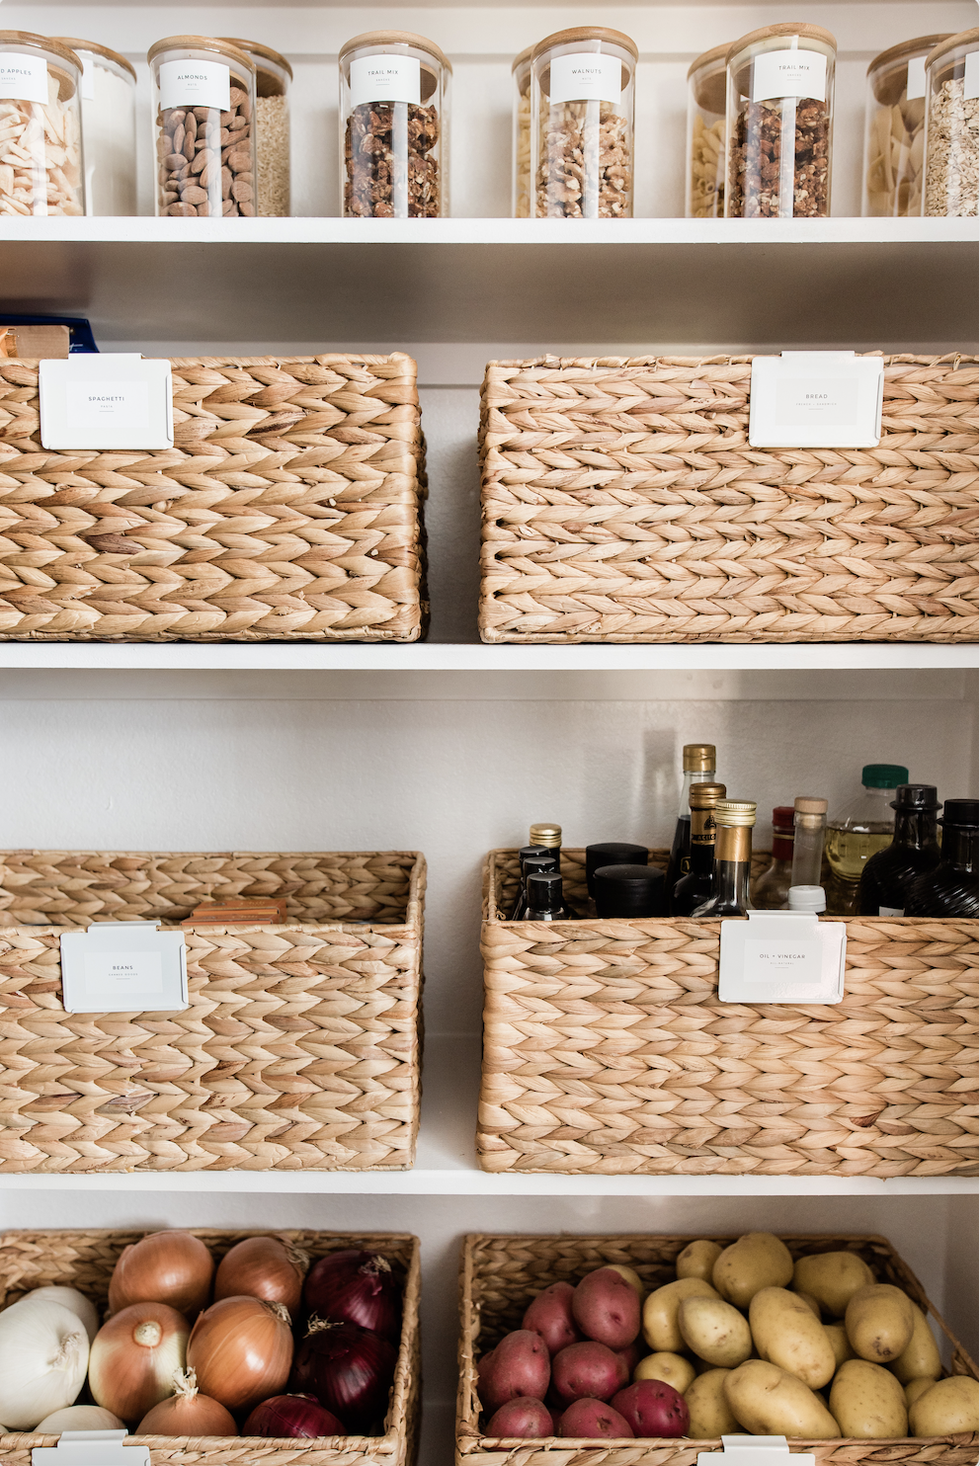 Pantry Organization and Storage Baskets, Pantry Organizer Bins White Pantry  Stor